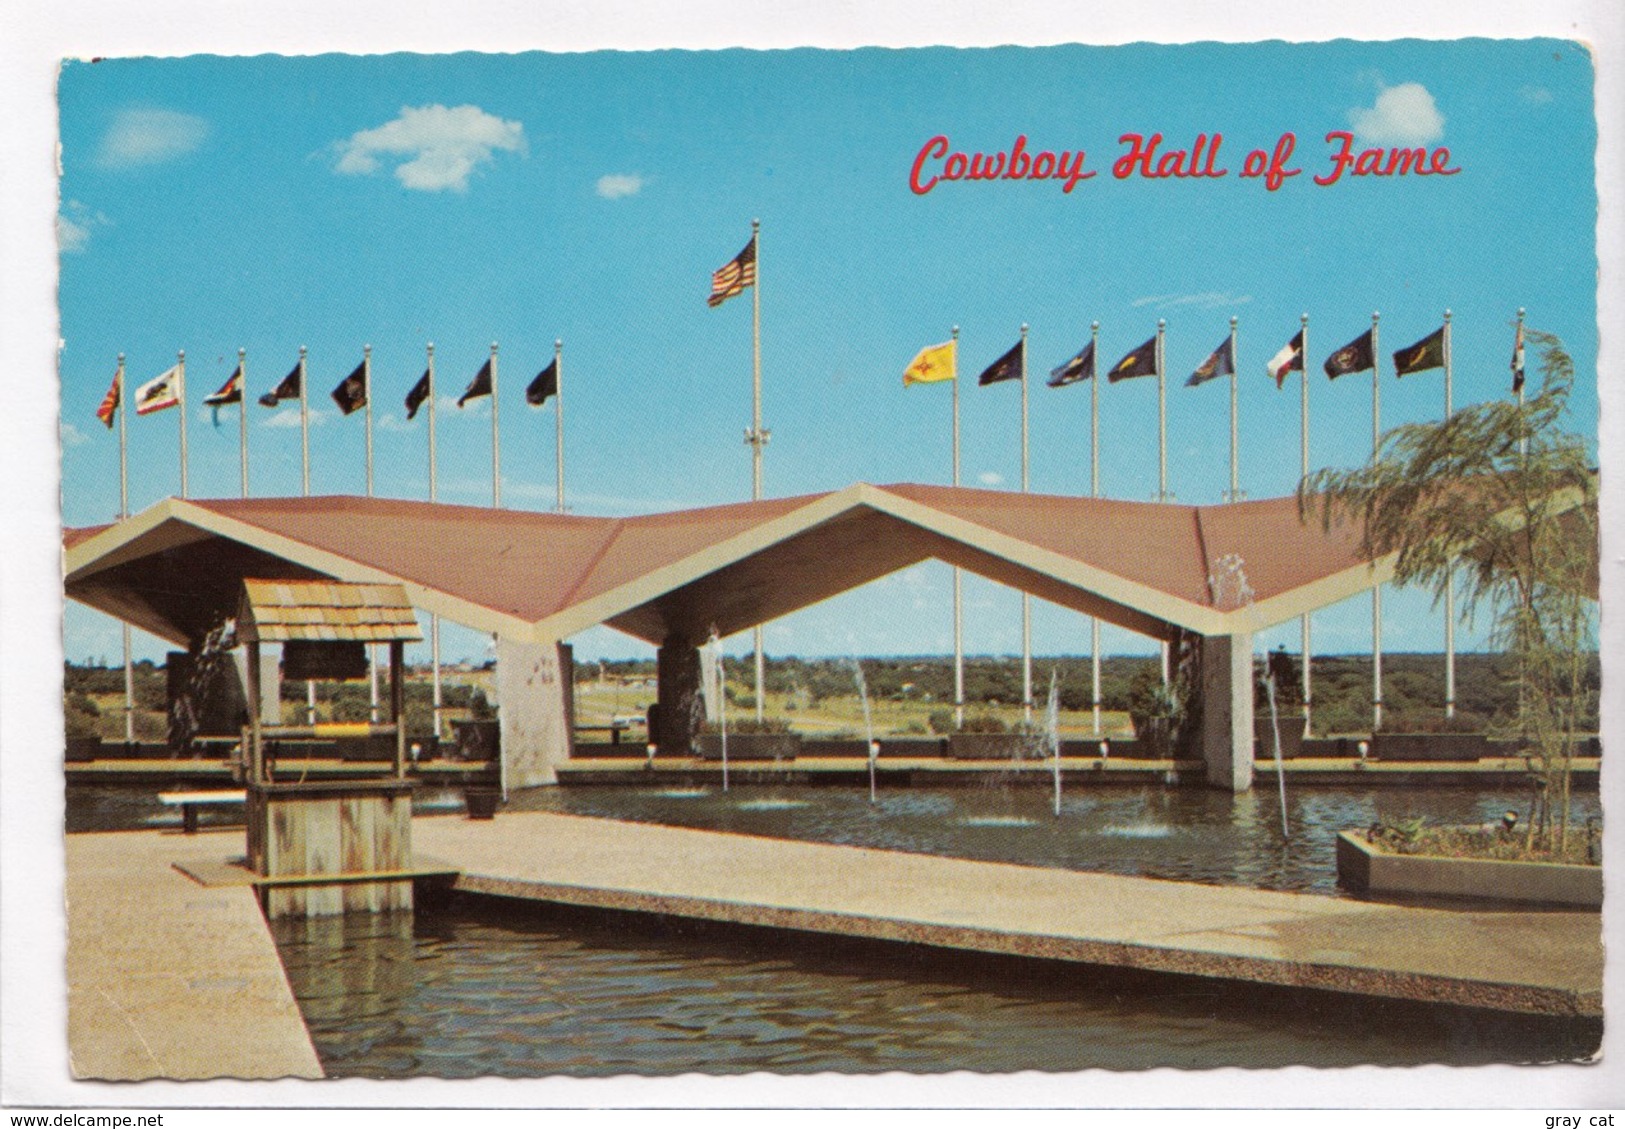 Cowboy Hall Of Fame, Oklahoma City, Oklahoma, Unused Postcard [22556] - Oklahoma City